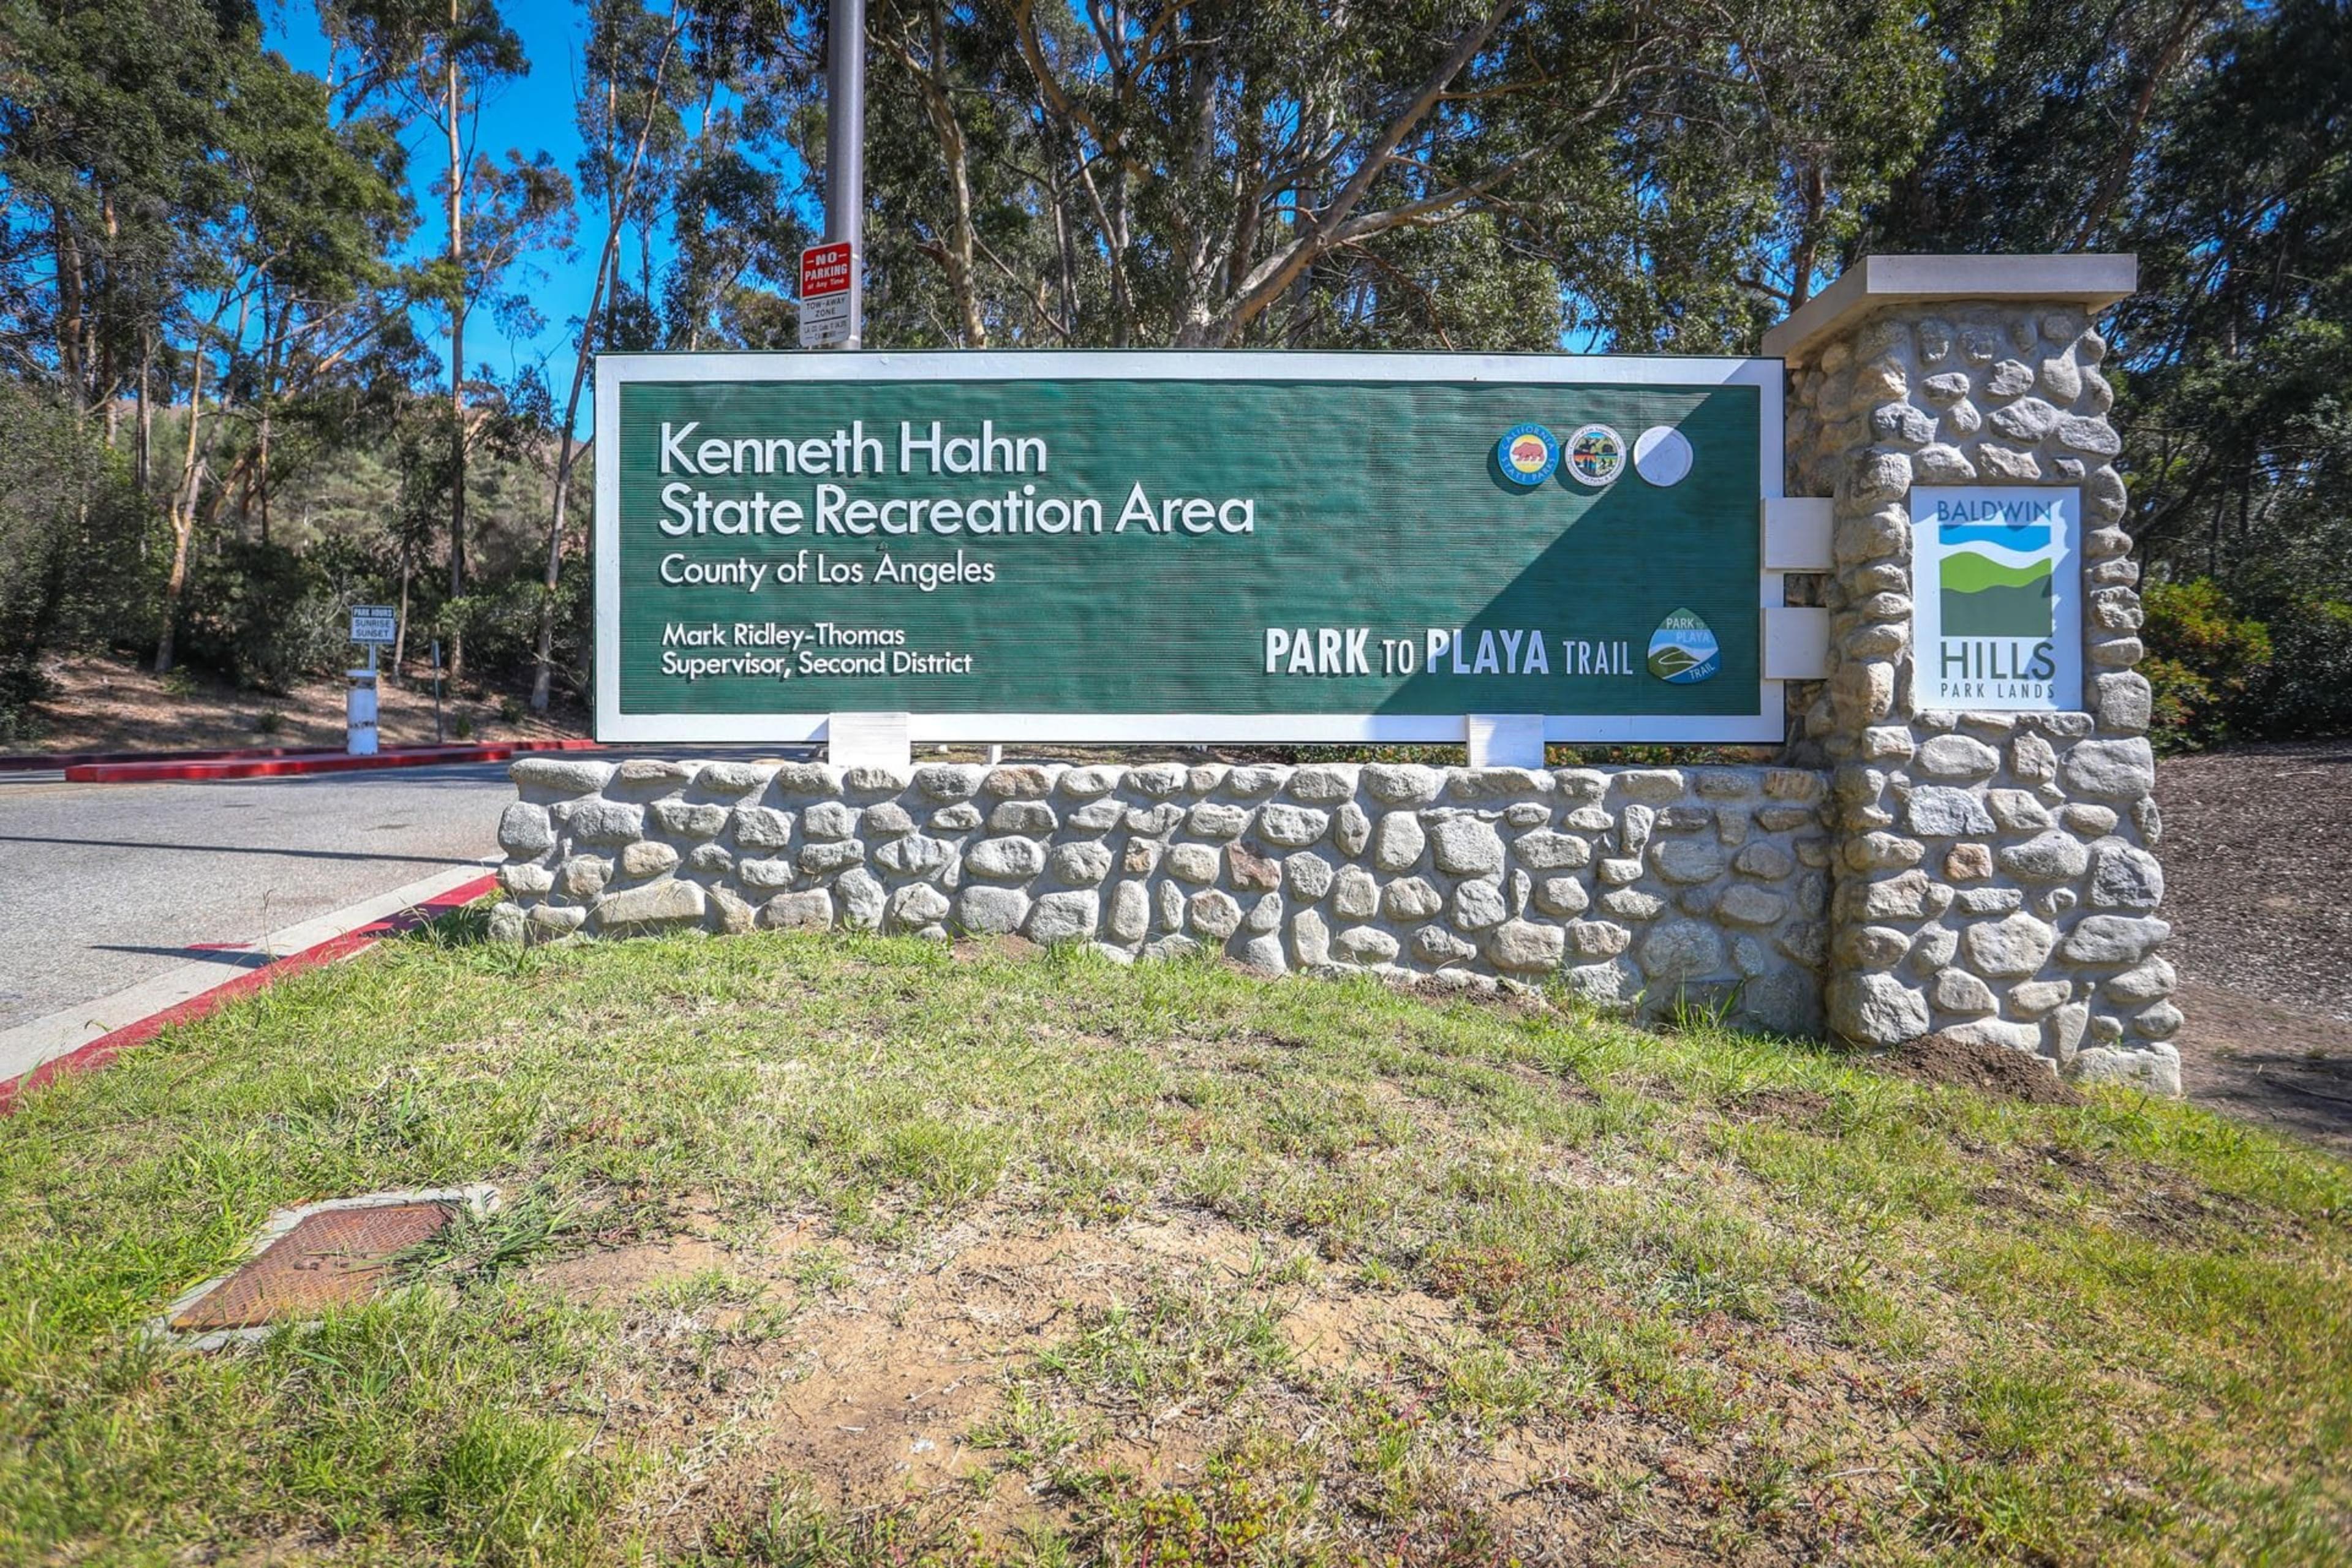 Kenneth Hahn State Recreation Area